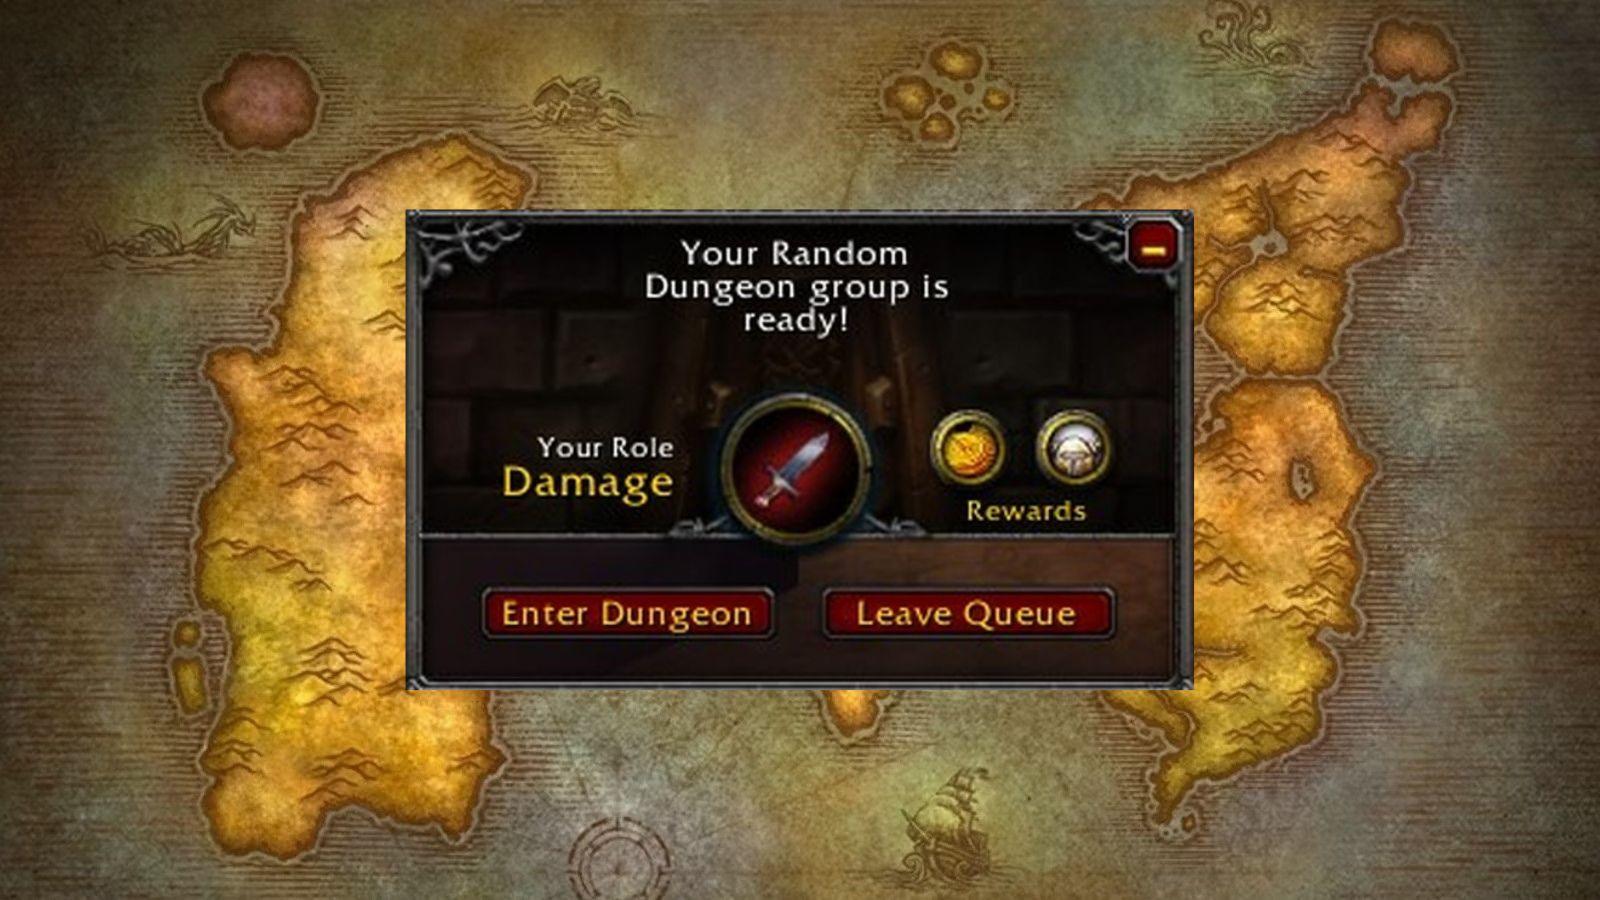 The dungeon finder logo menu from World of Warcraft